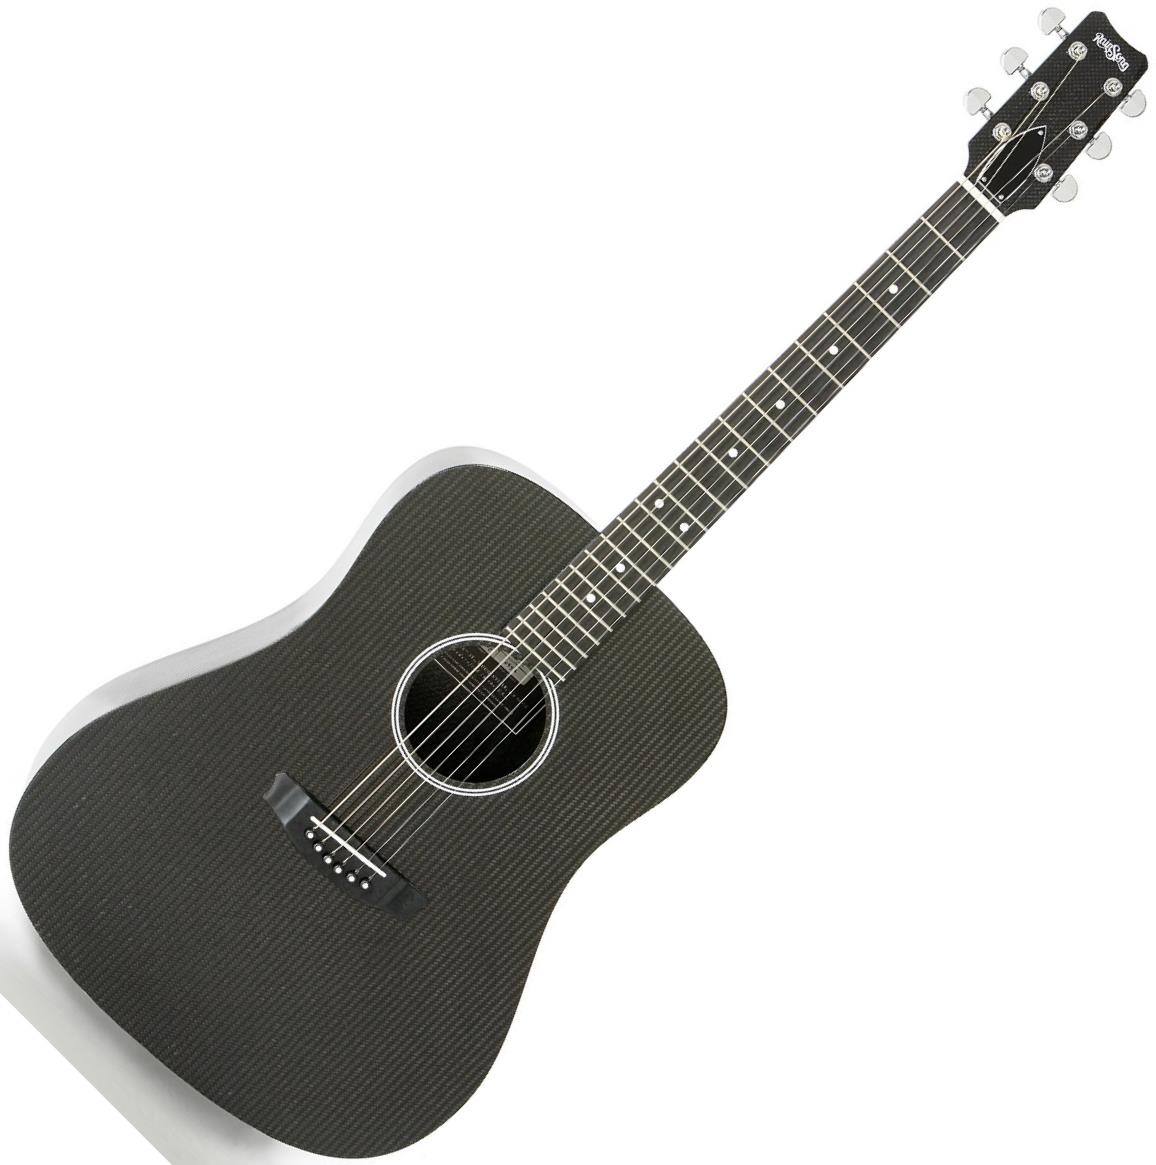 RainSong Hybrid Series H-DR1100N2 Acoustic Guitar